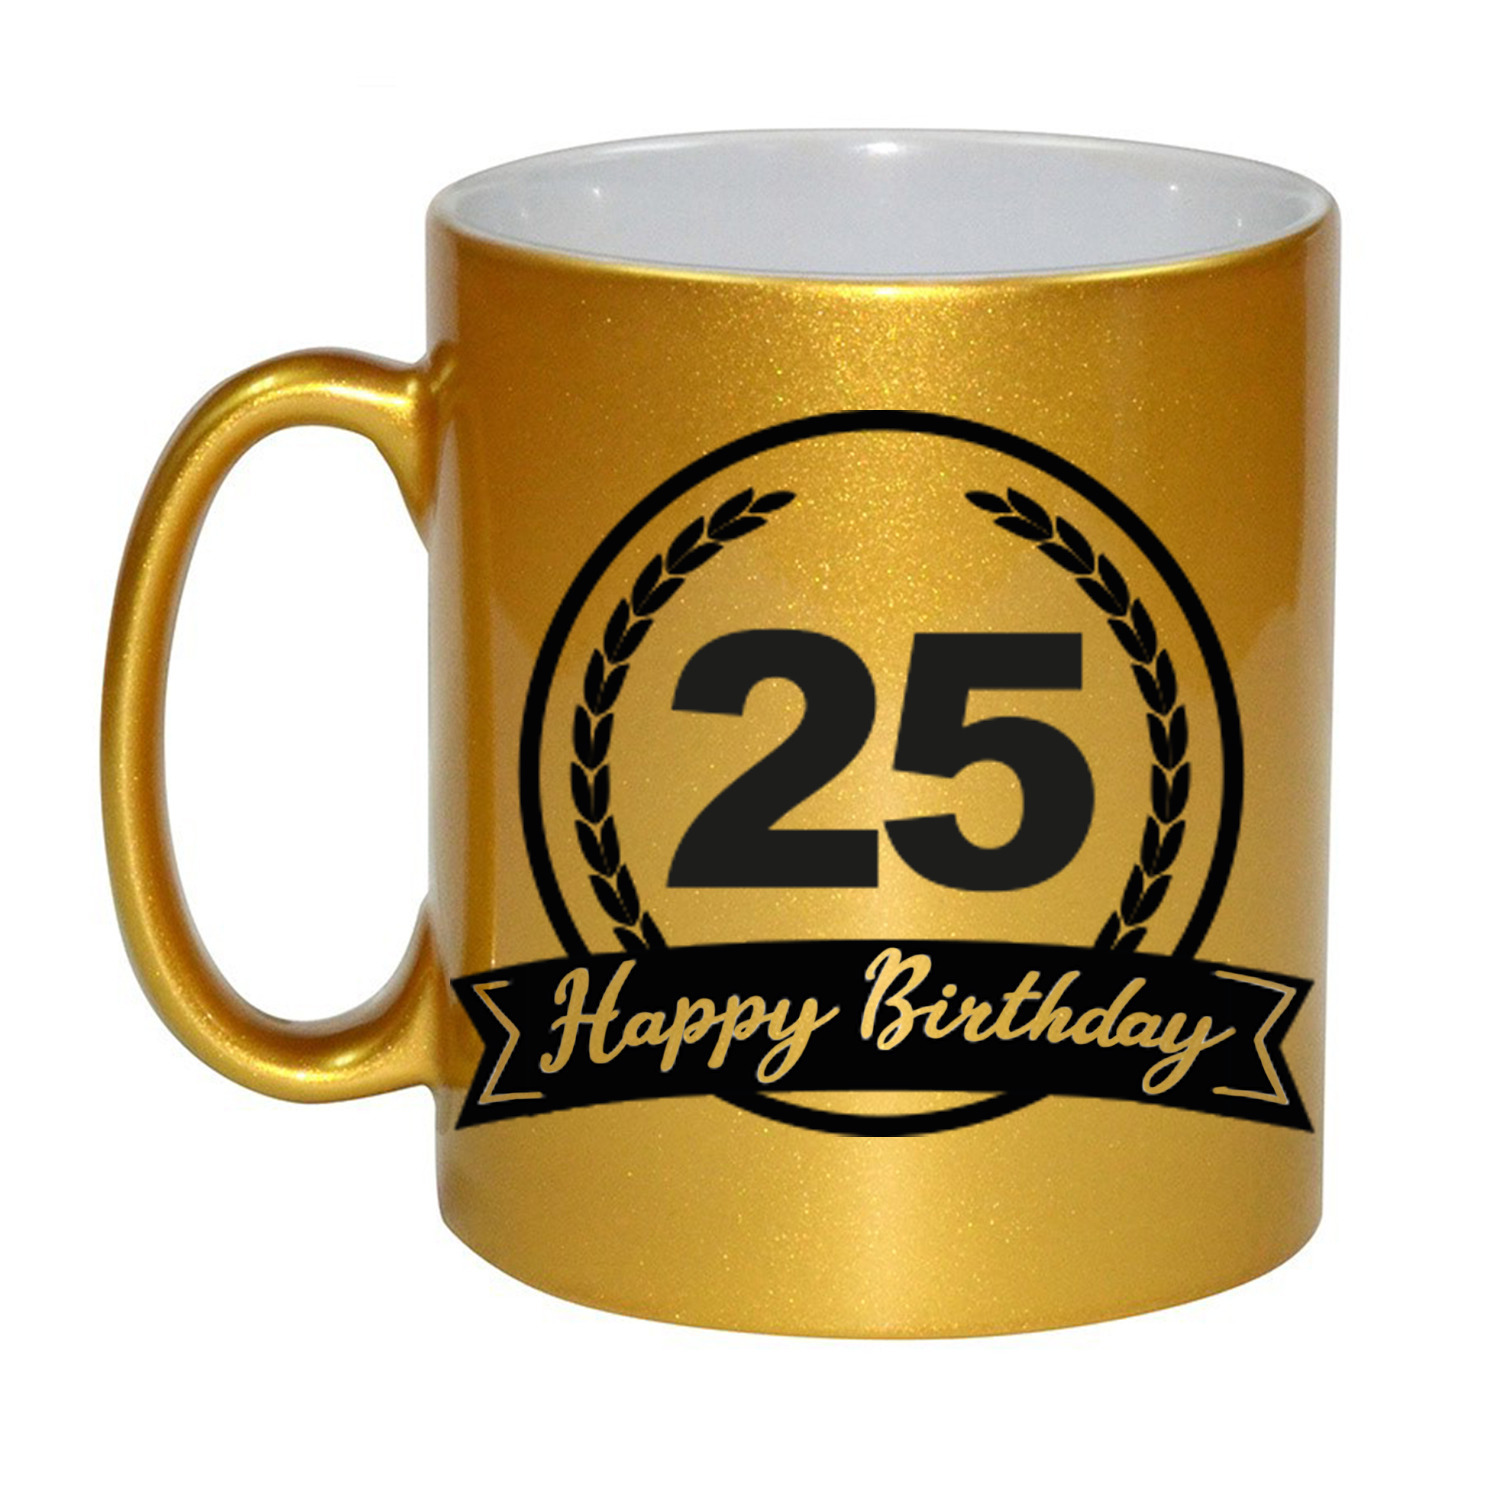 Happy Birthday 25 years gouden cadeau mok / beker met wimpel 330 ml